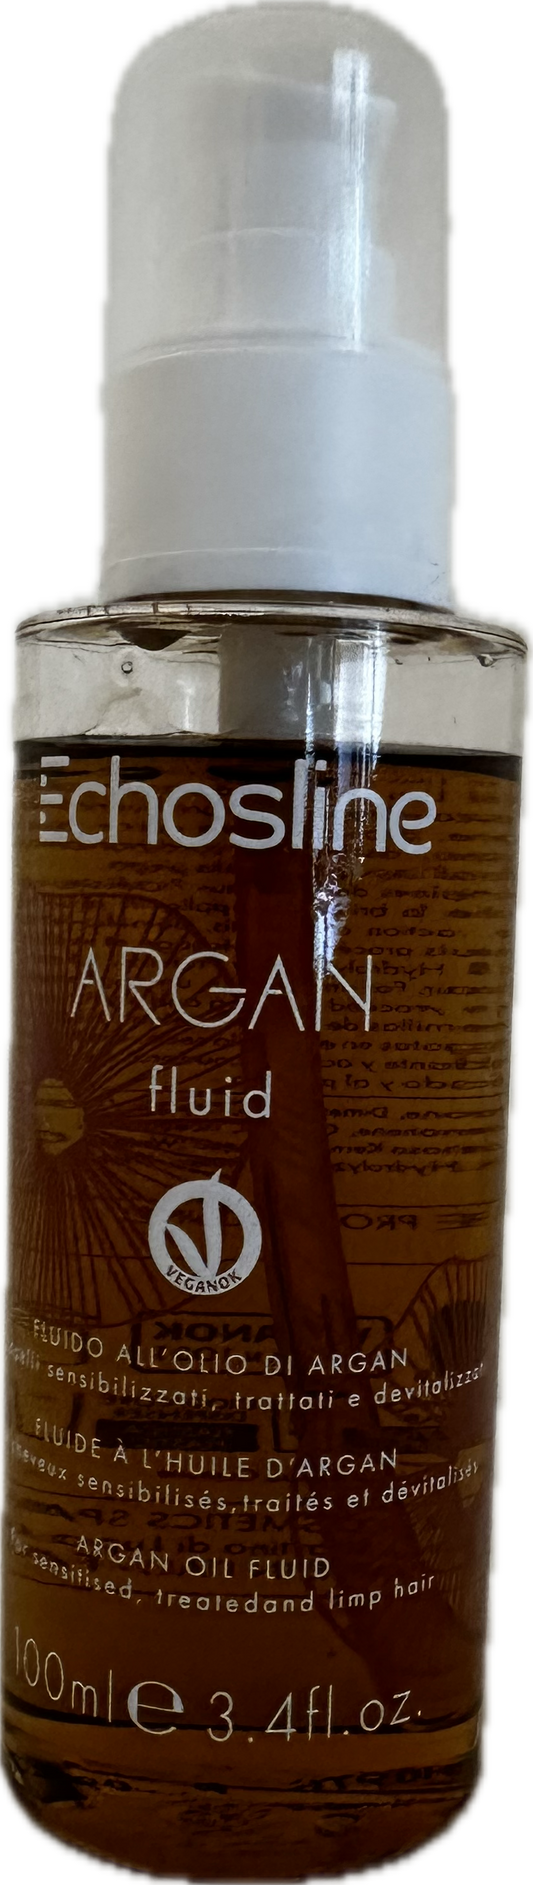 Echos Line  - Argan fluid - Fluido prezioso all'olio di argan 100 ml